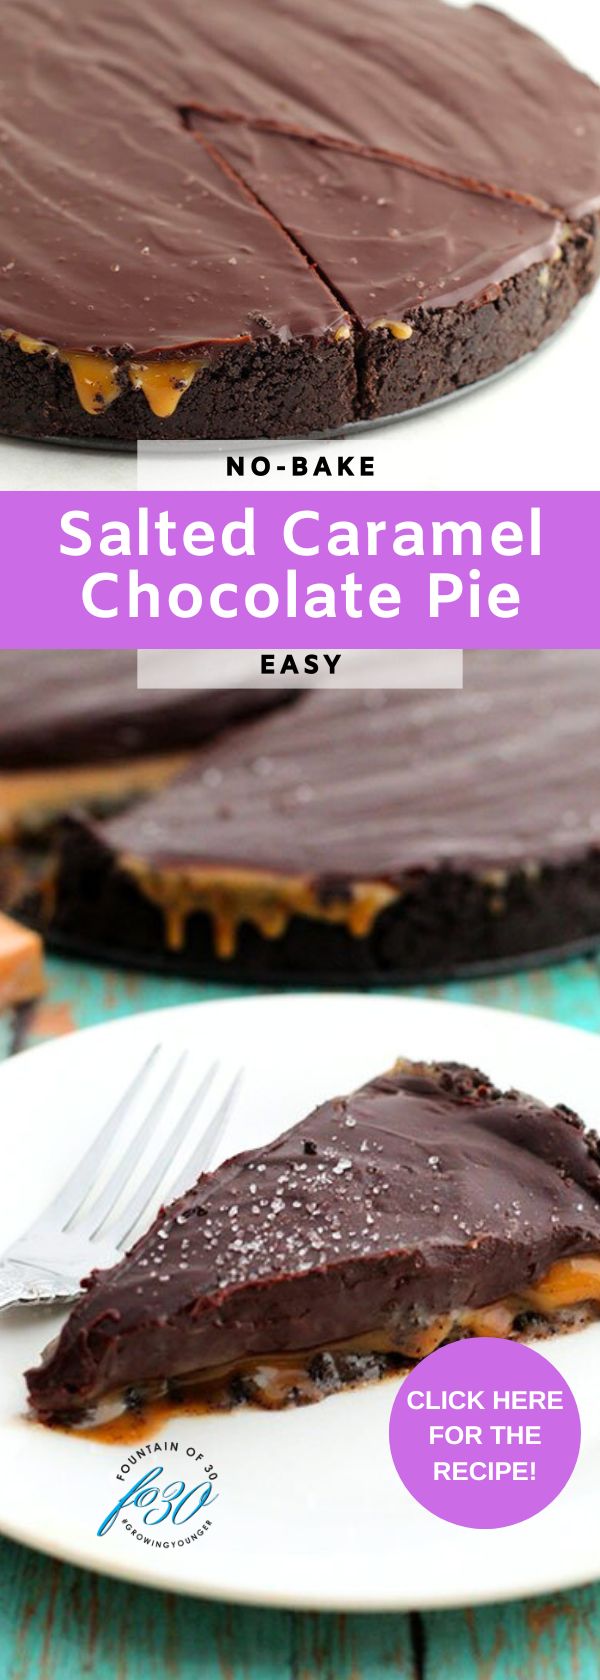 easy no-bake salted caramel chocolate pie recipe fountainof30